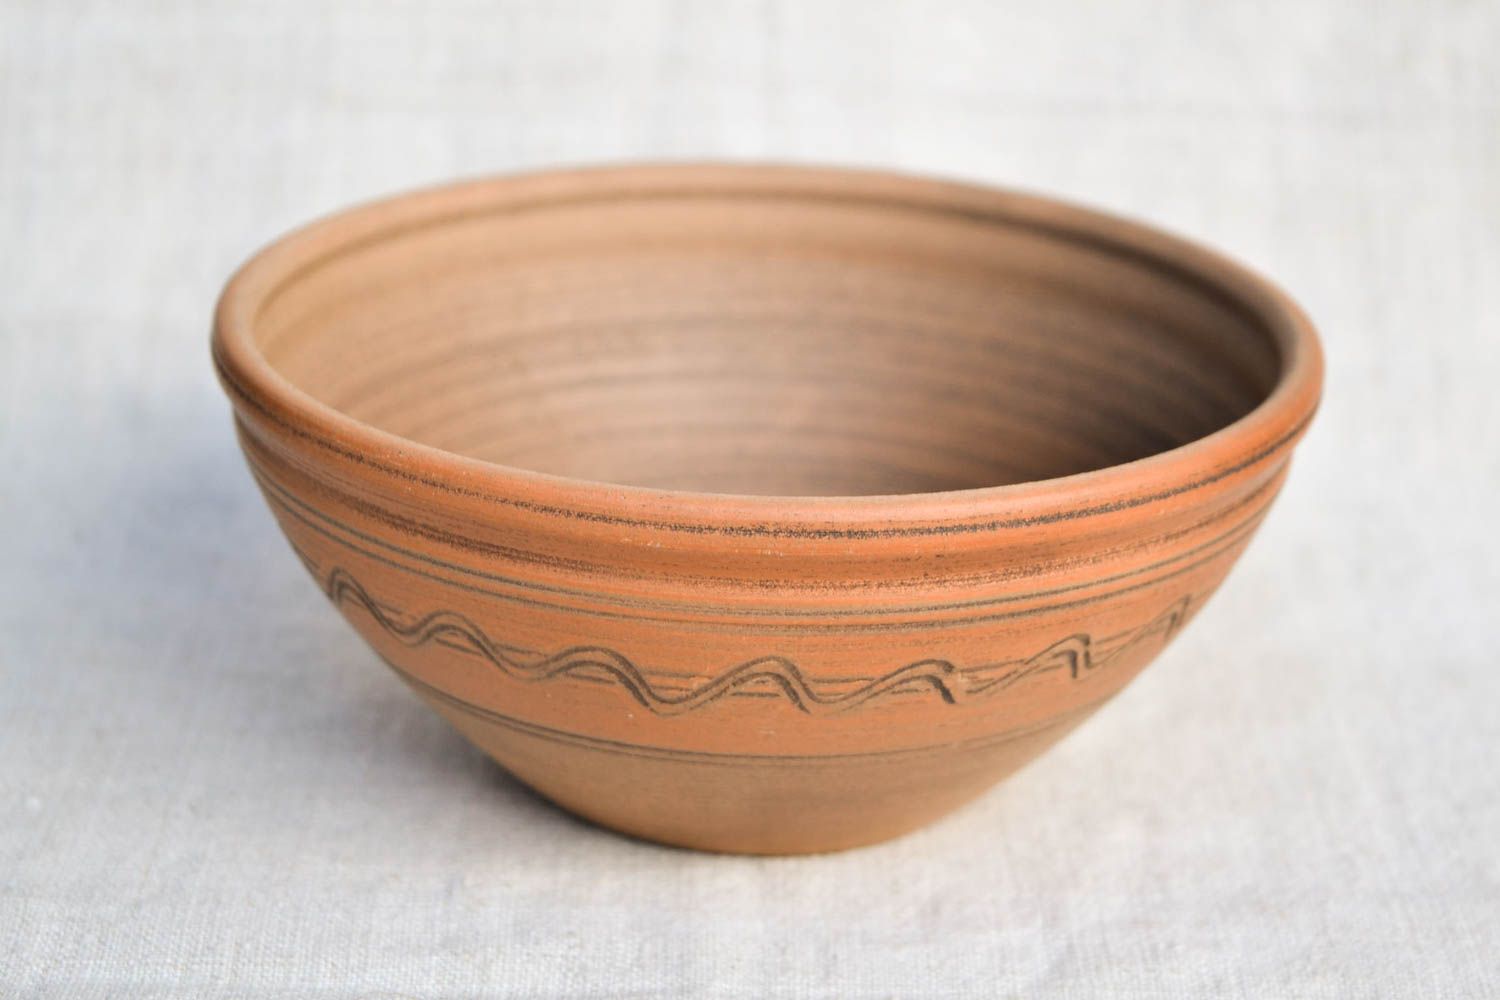 6 8 oz handmade ceramic Italian style cereal bowl 0,71 lb photo 4